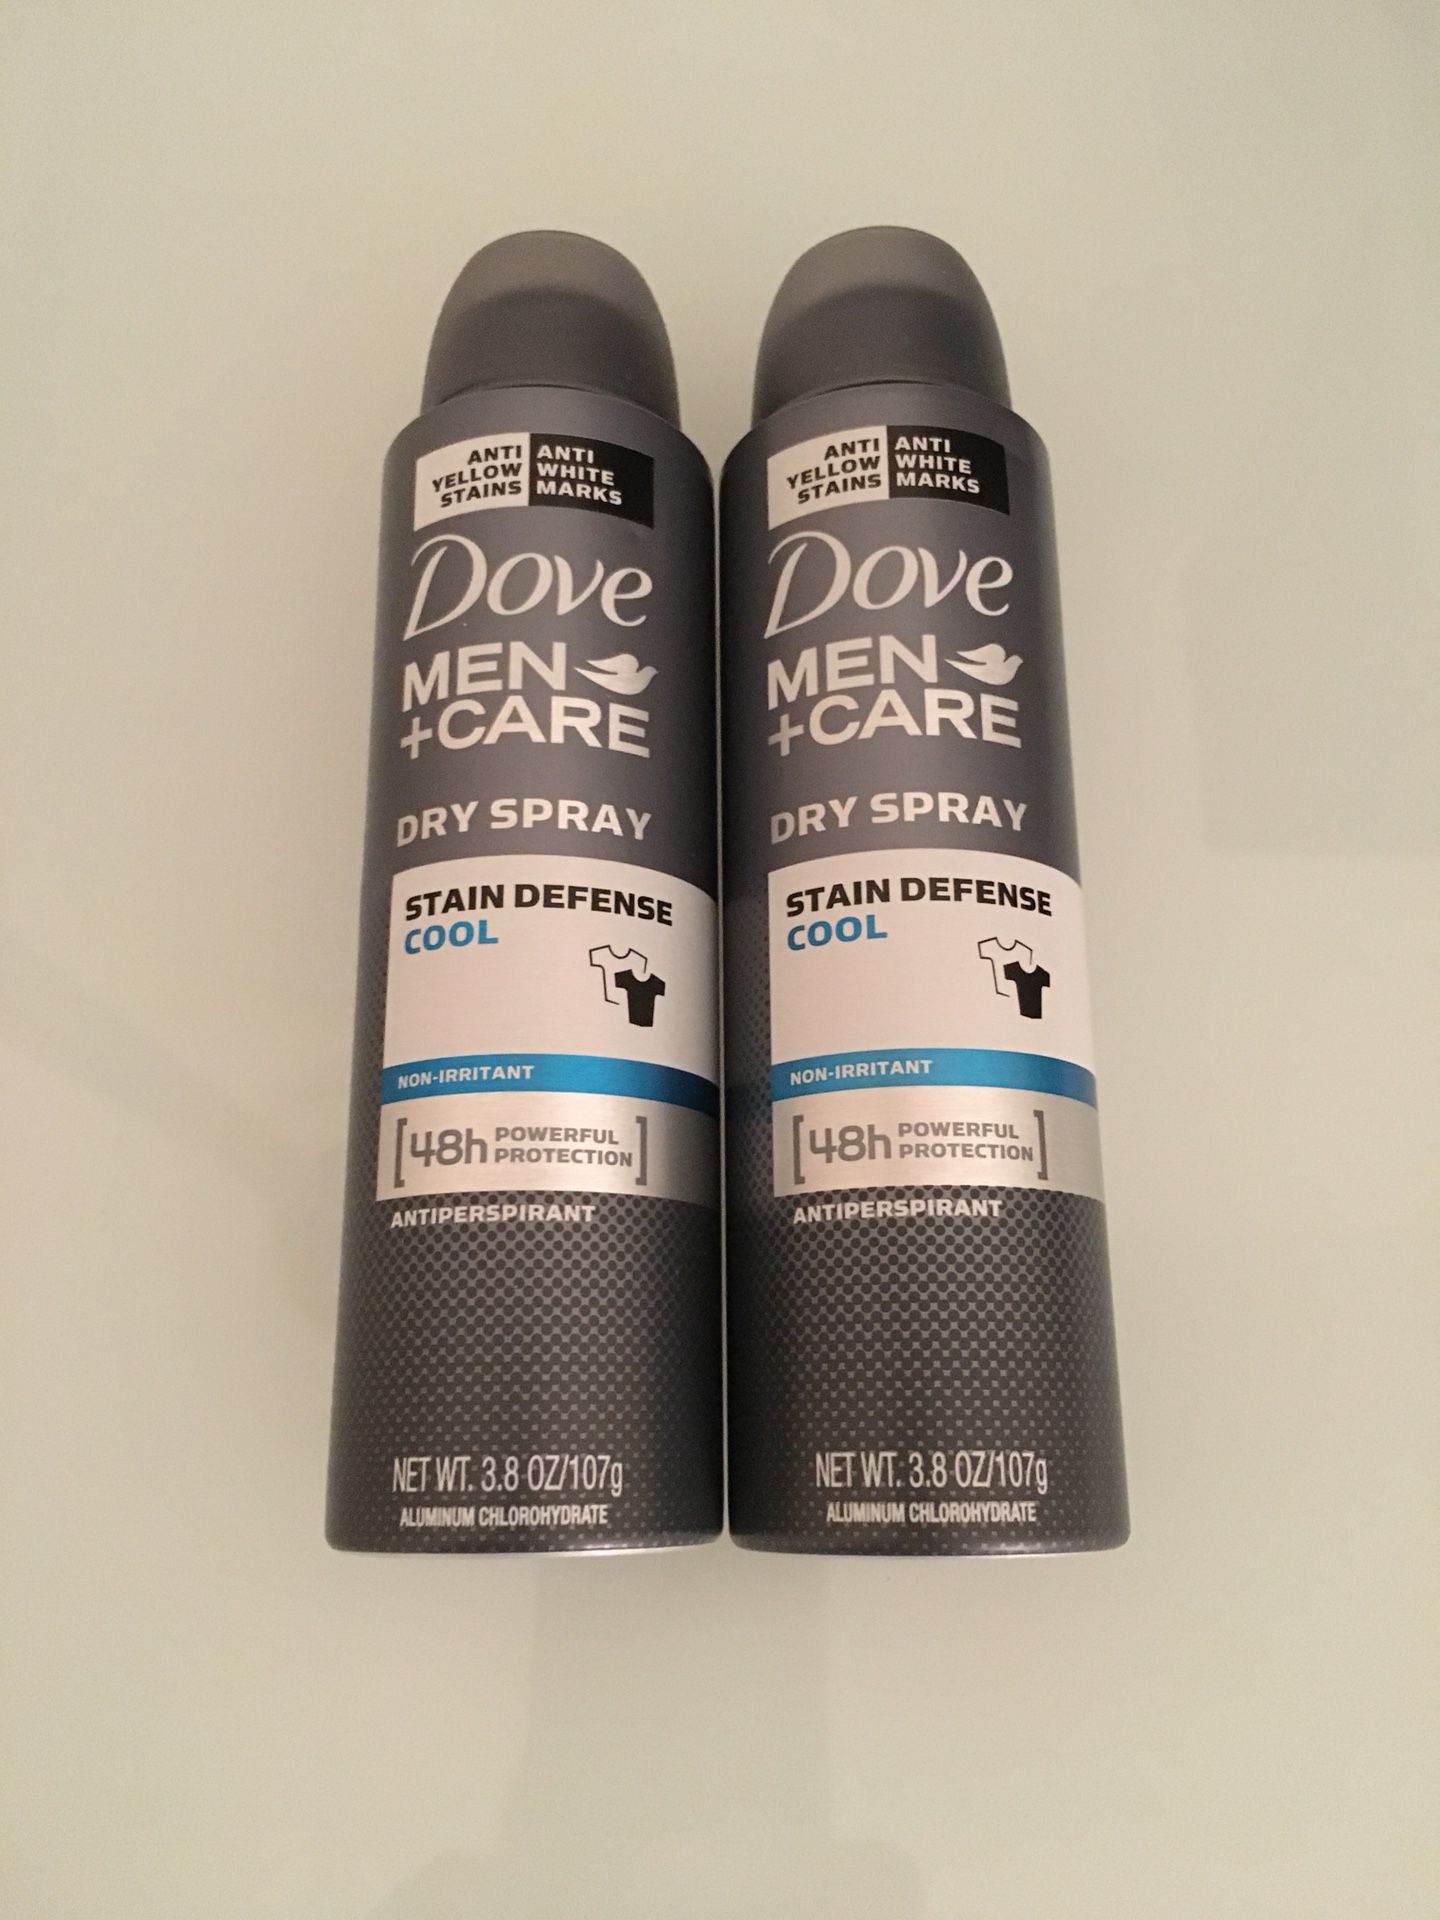 3 Dove Men + Care Dry Spray Deodorant